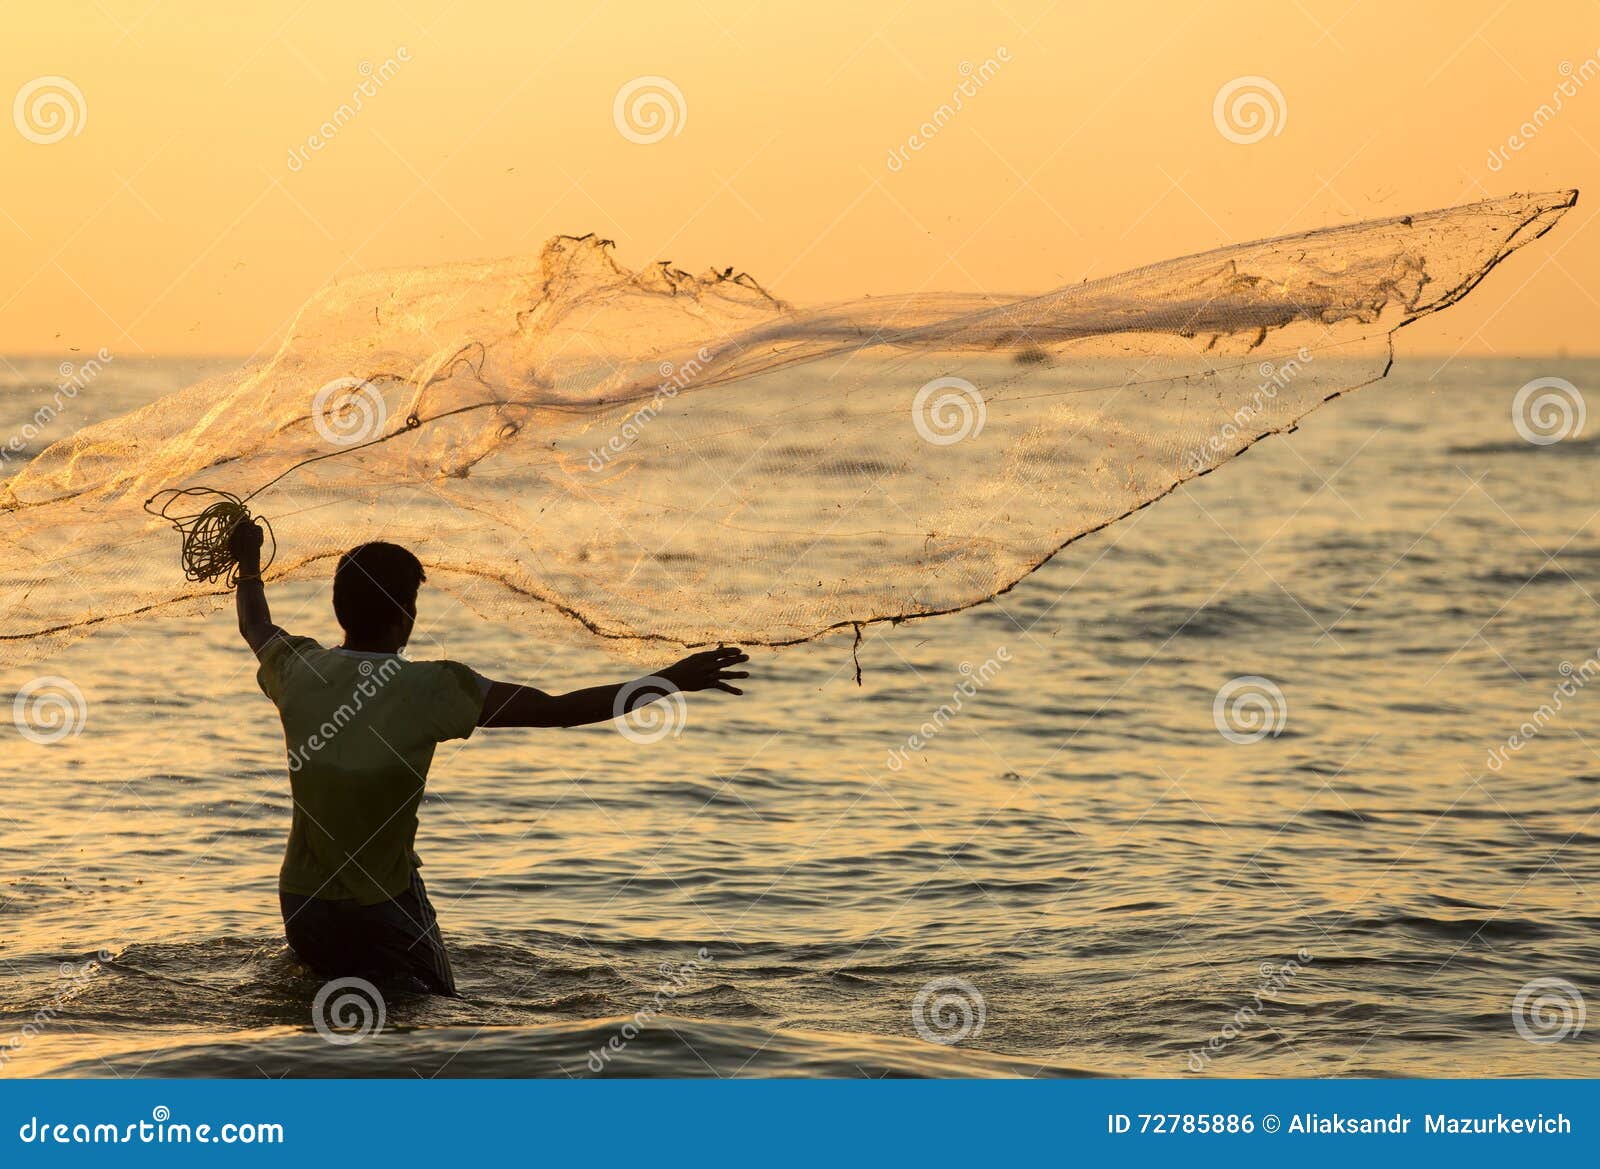 https://thumbs.dreamstime.com/z/silhouette-unidentified-indian-fisherman-throwing-net-sea-sunset-fort-kochi-india-72785886.jpg